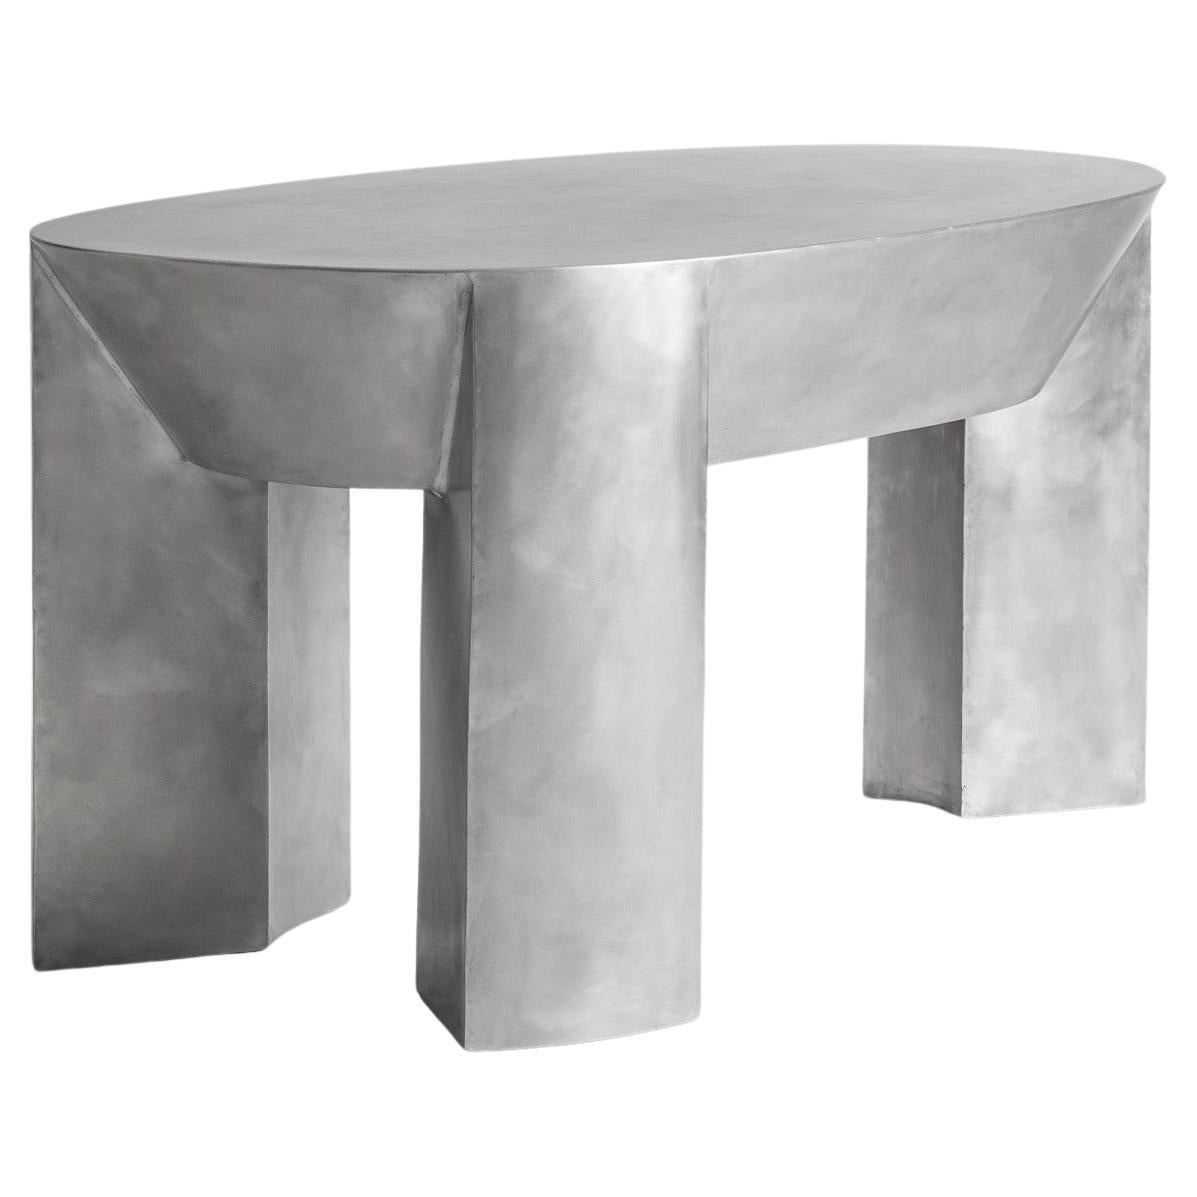 Table en aluminium de Jan Ankiersztajn 